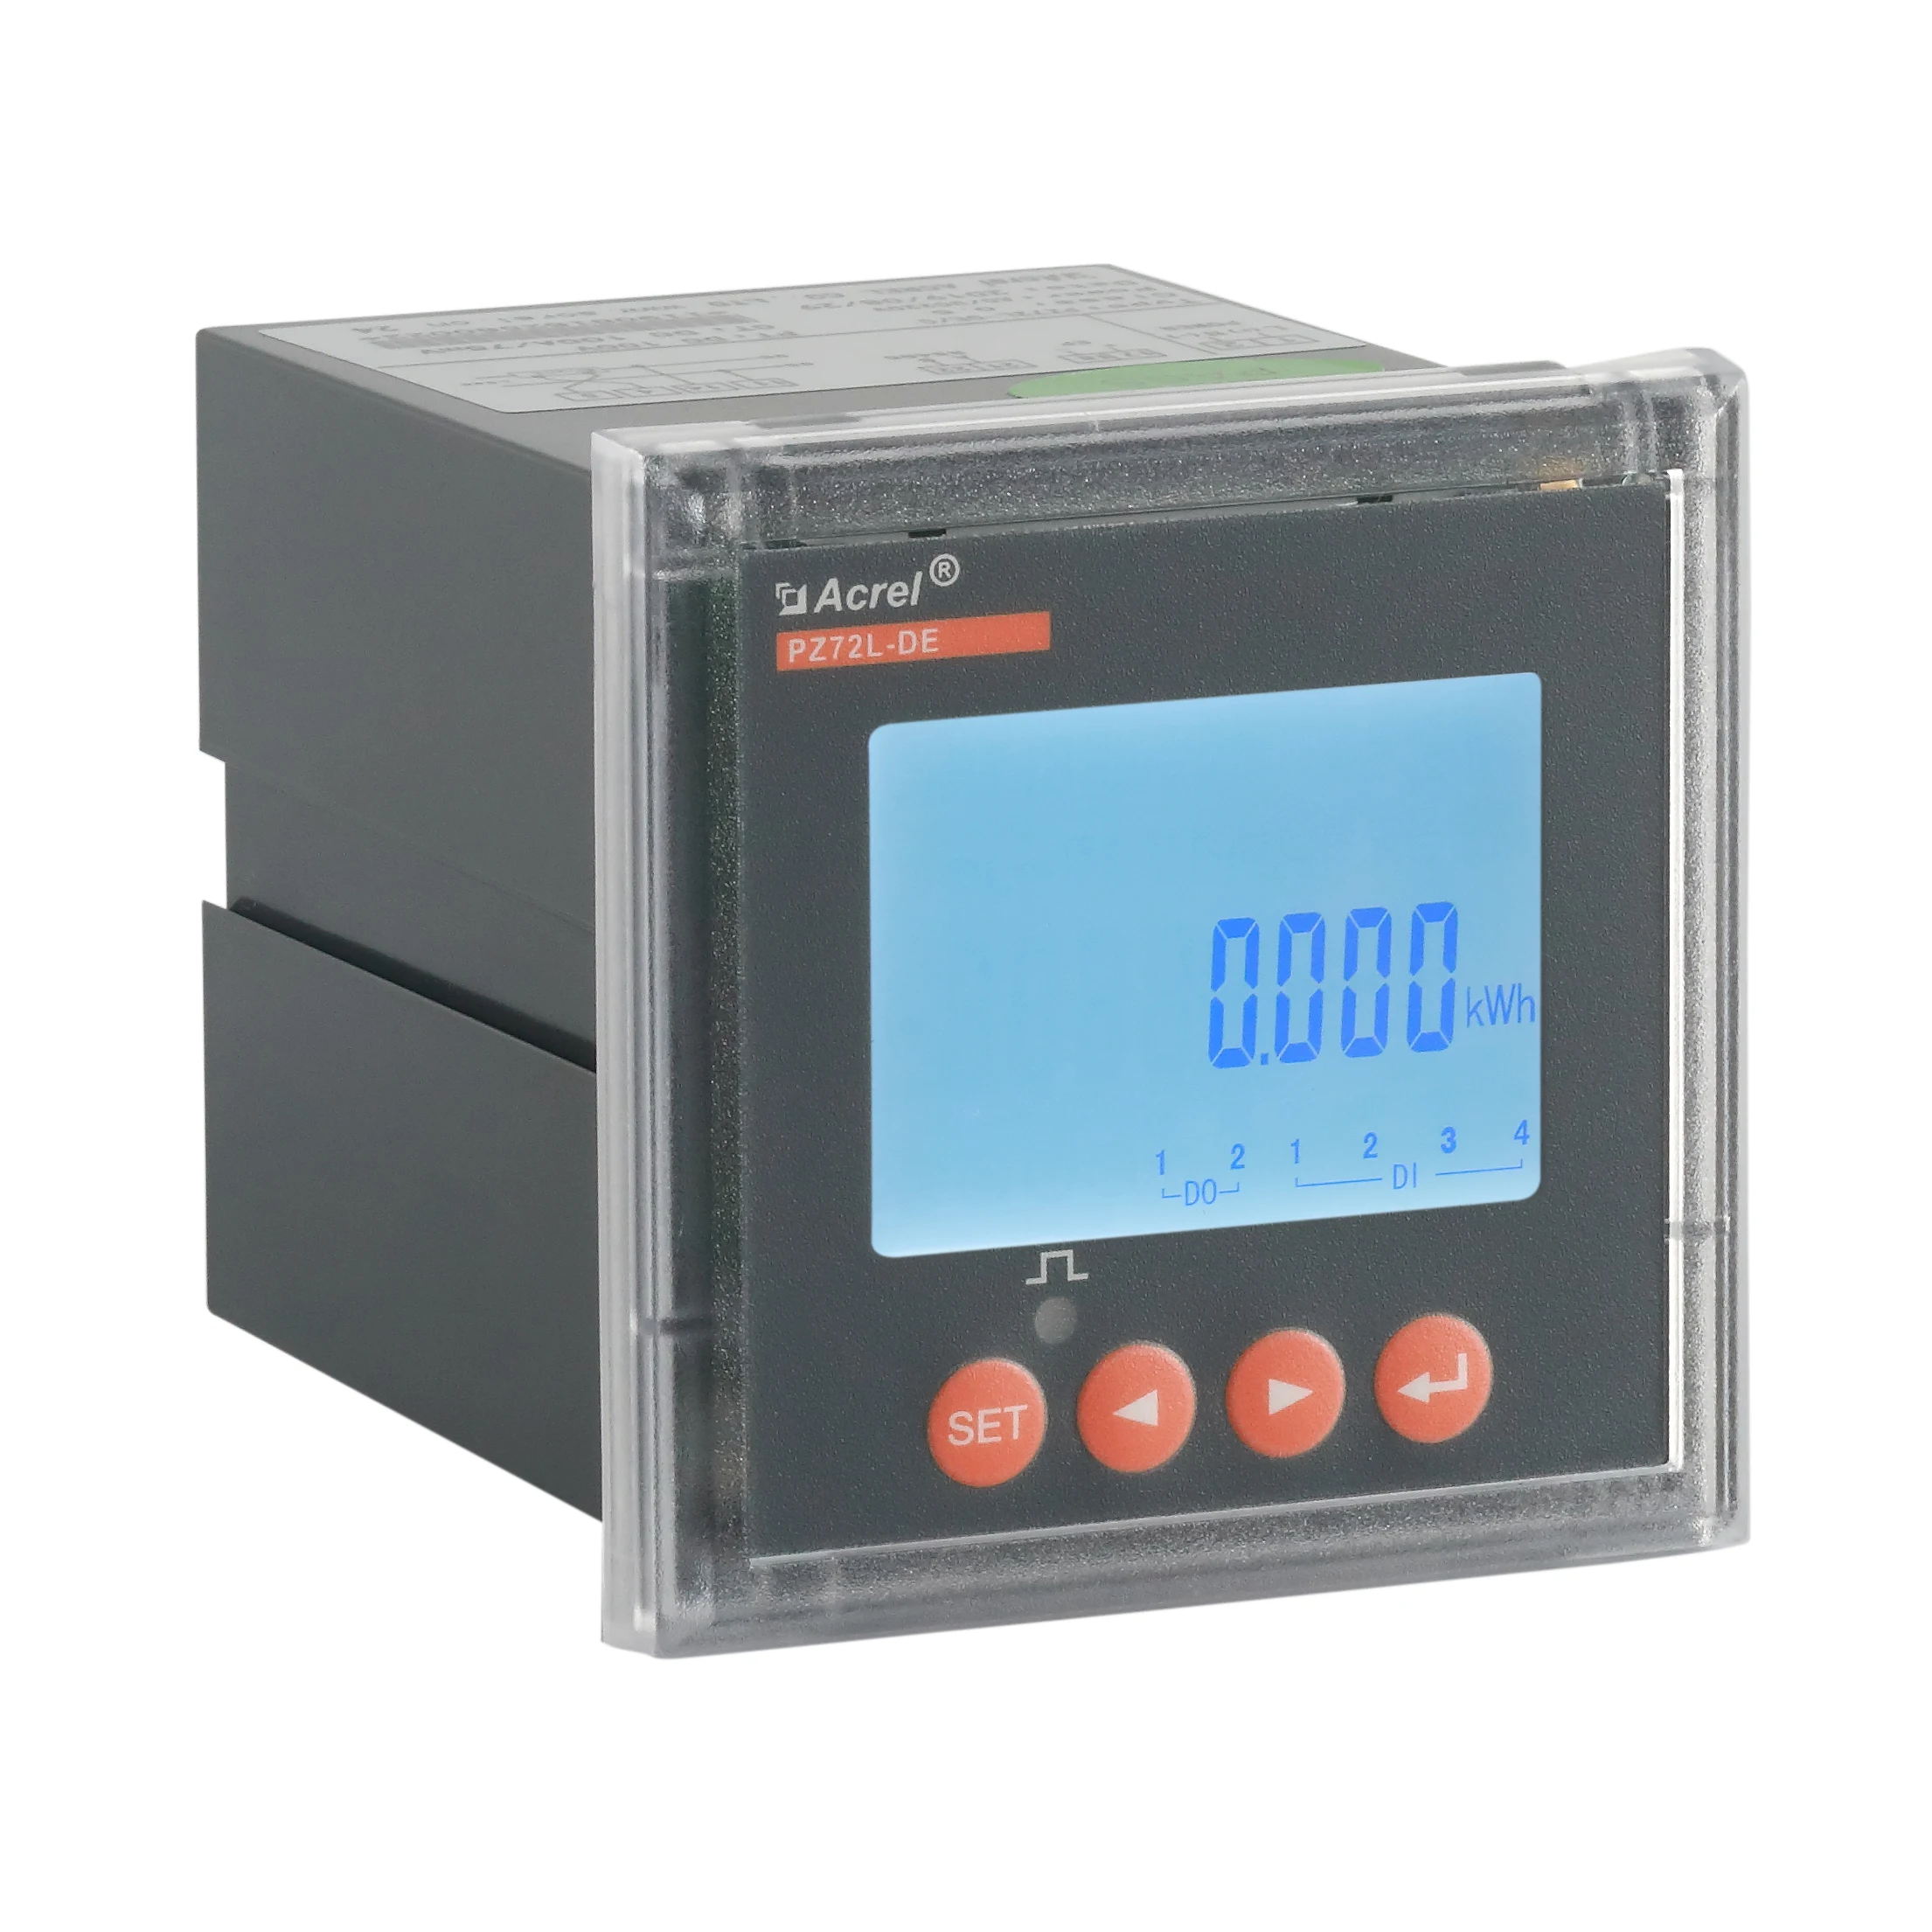 

Acrel 0-1000V panel mounted smart energy meter DC voltage current kilowatt meter with Modbus protocol